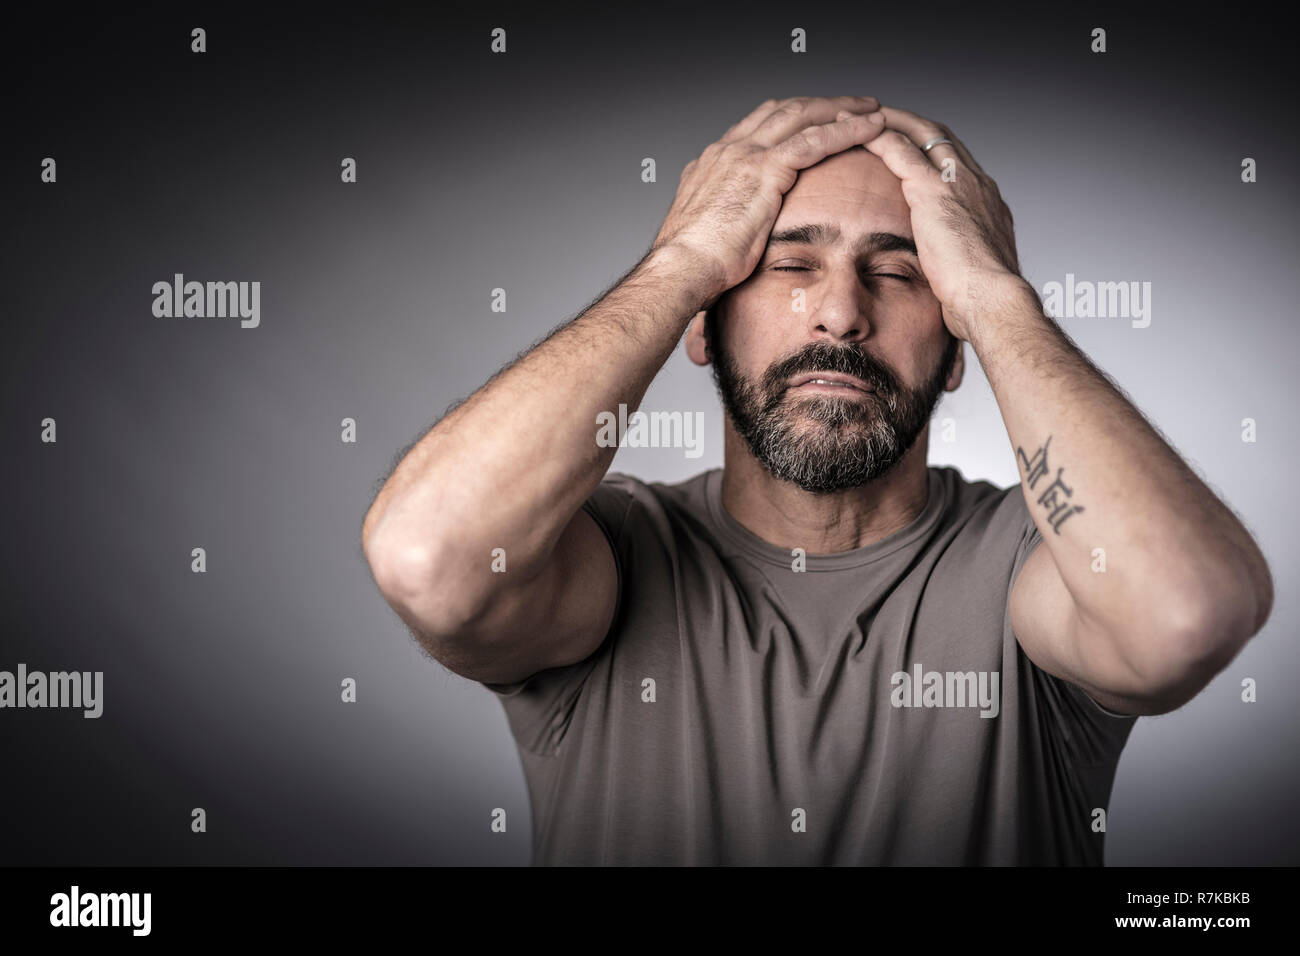 stressed man hold his head, close eyes studio portrait Stock Photo